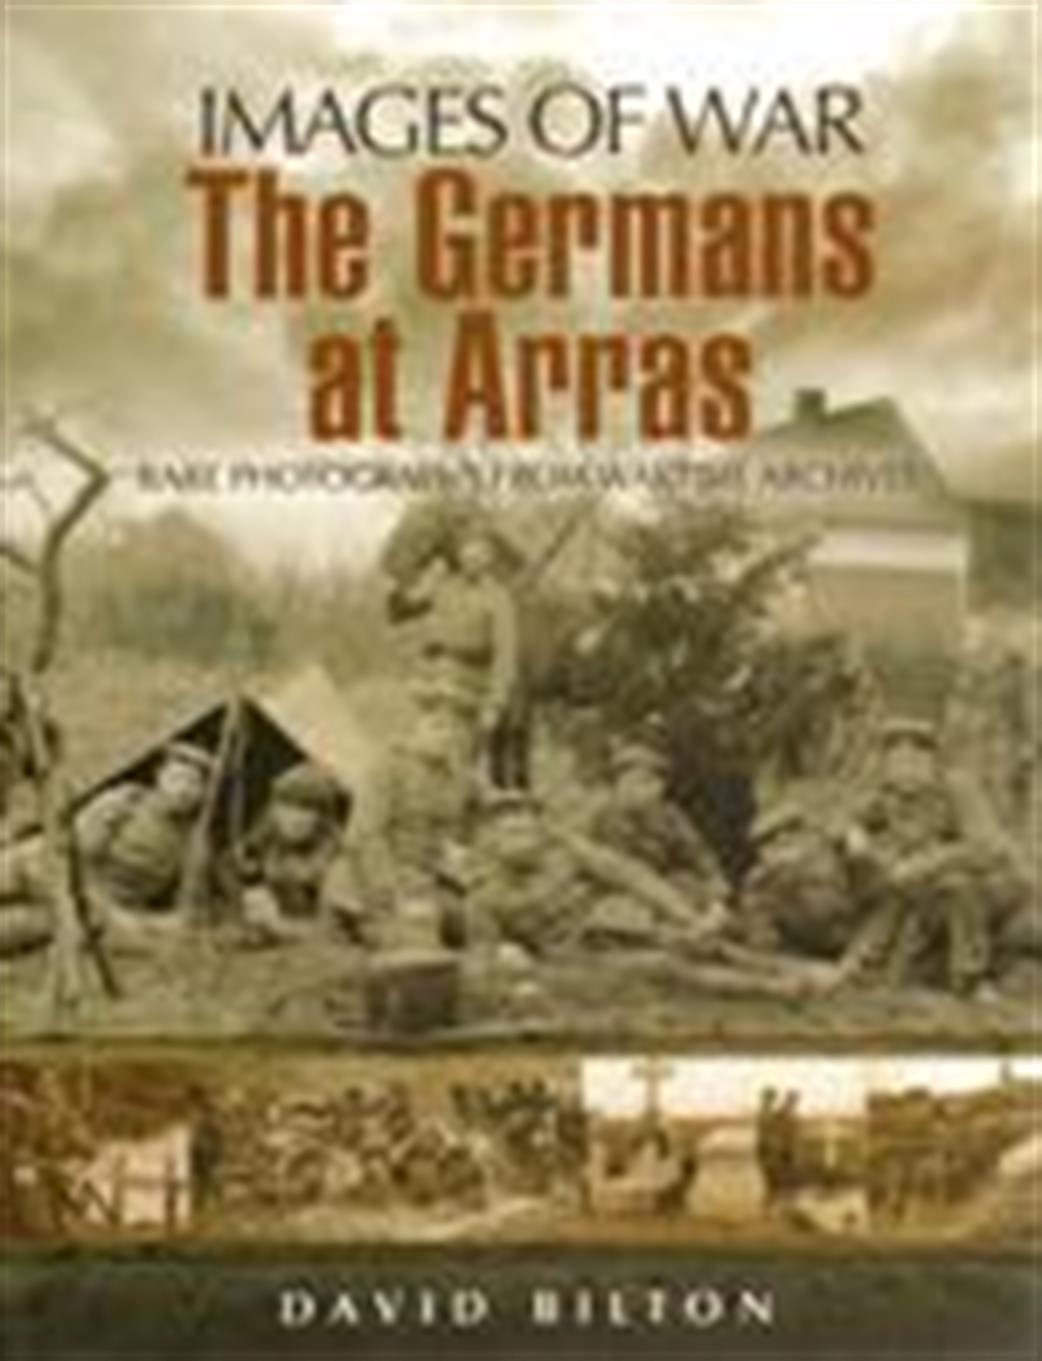 Pen & Sword  184415768-7 The Germans at Arras - Images of War Series